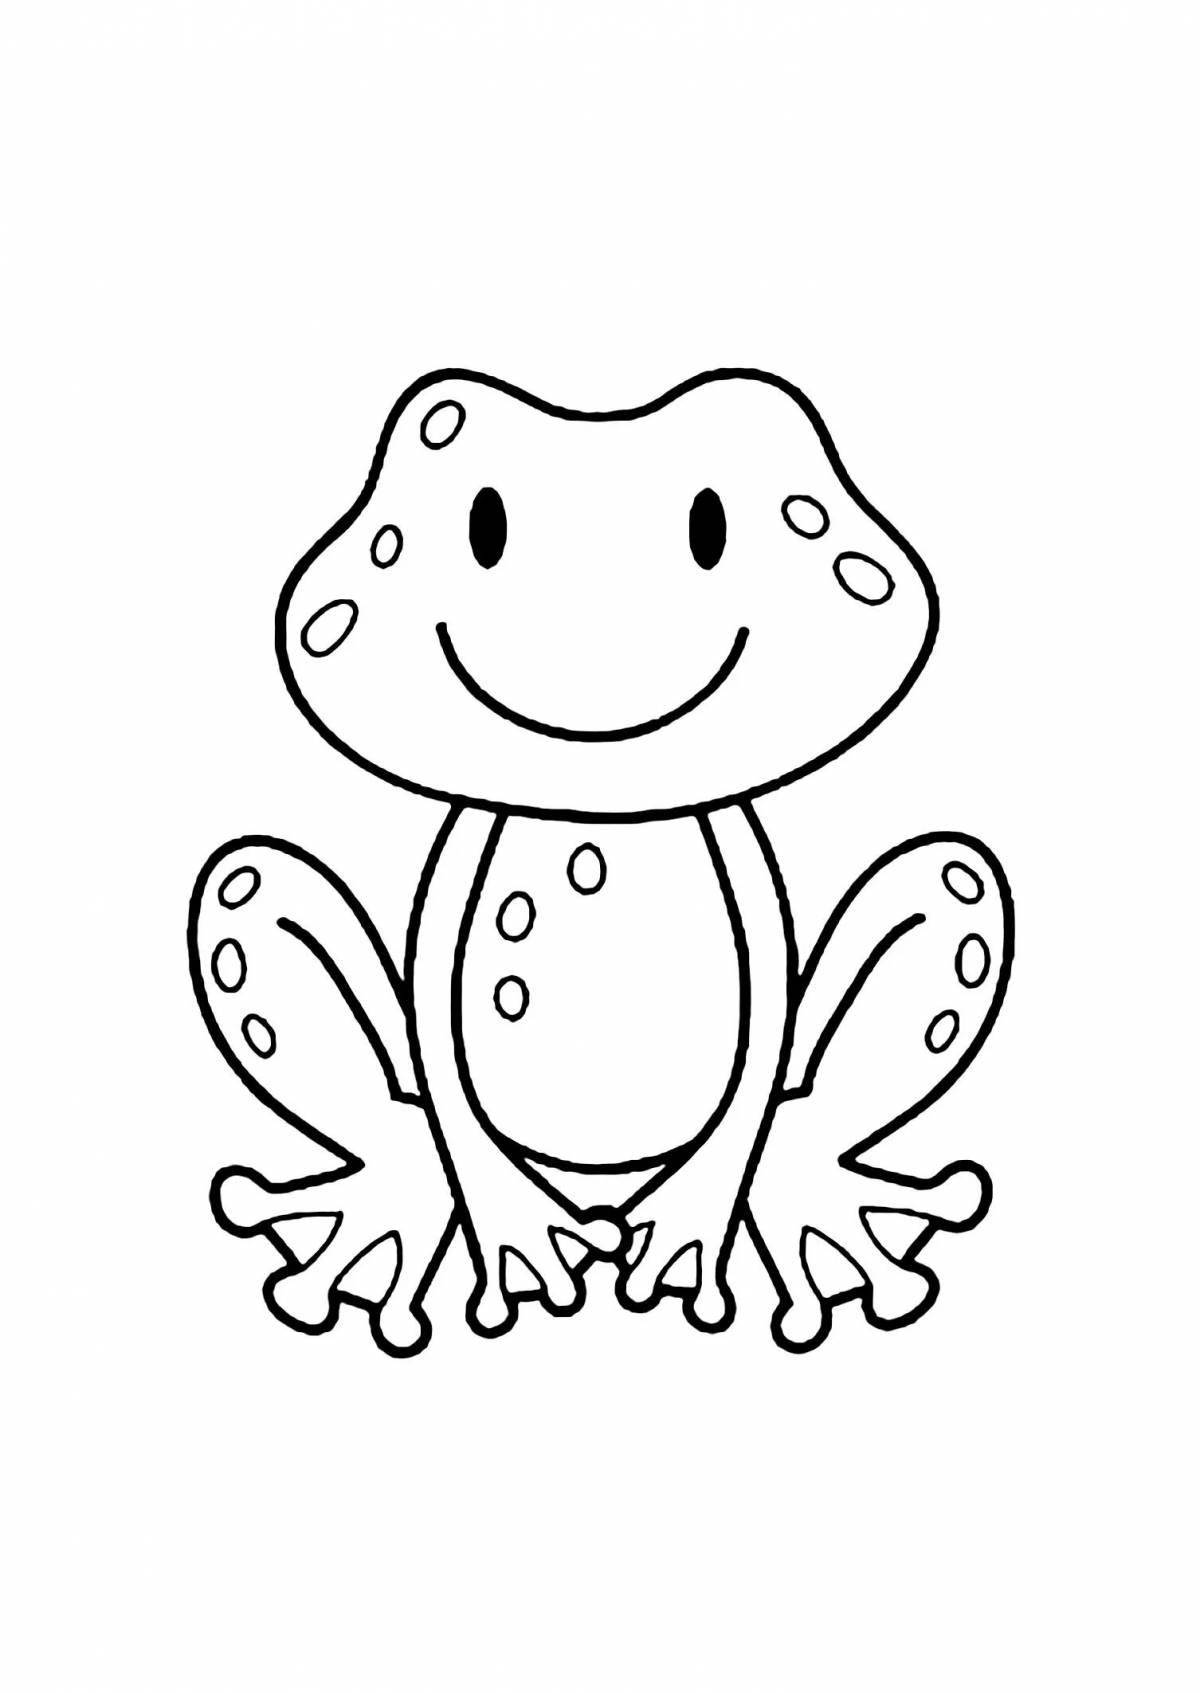 Violent kawaii frog coloring book